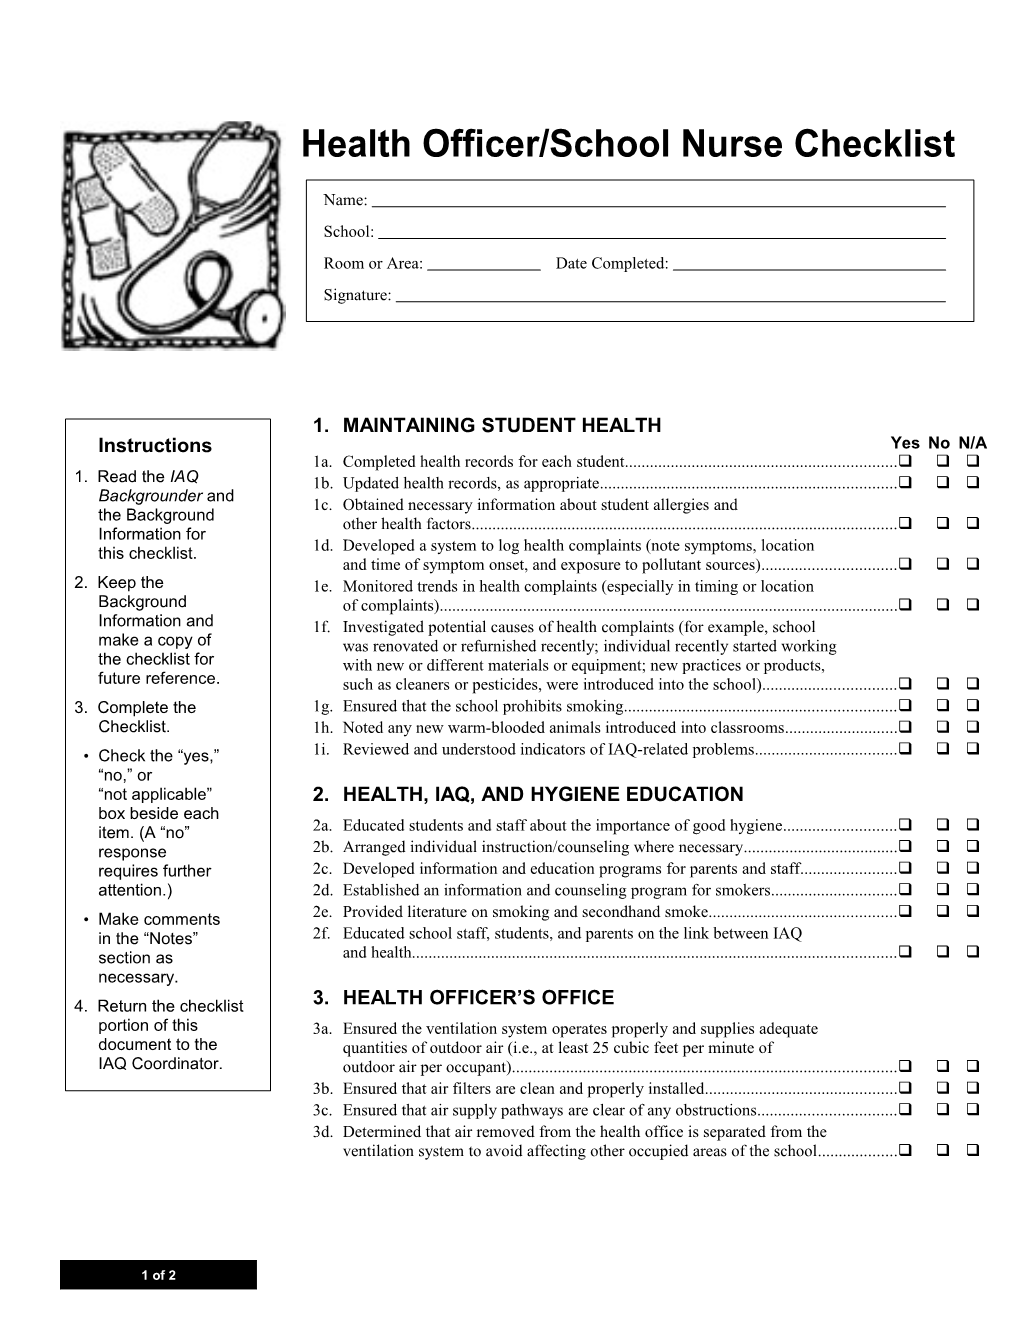 Health Officer/School Nurse Checklist